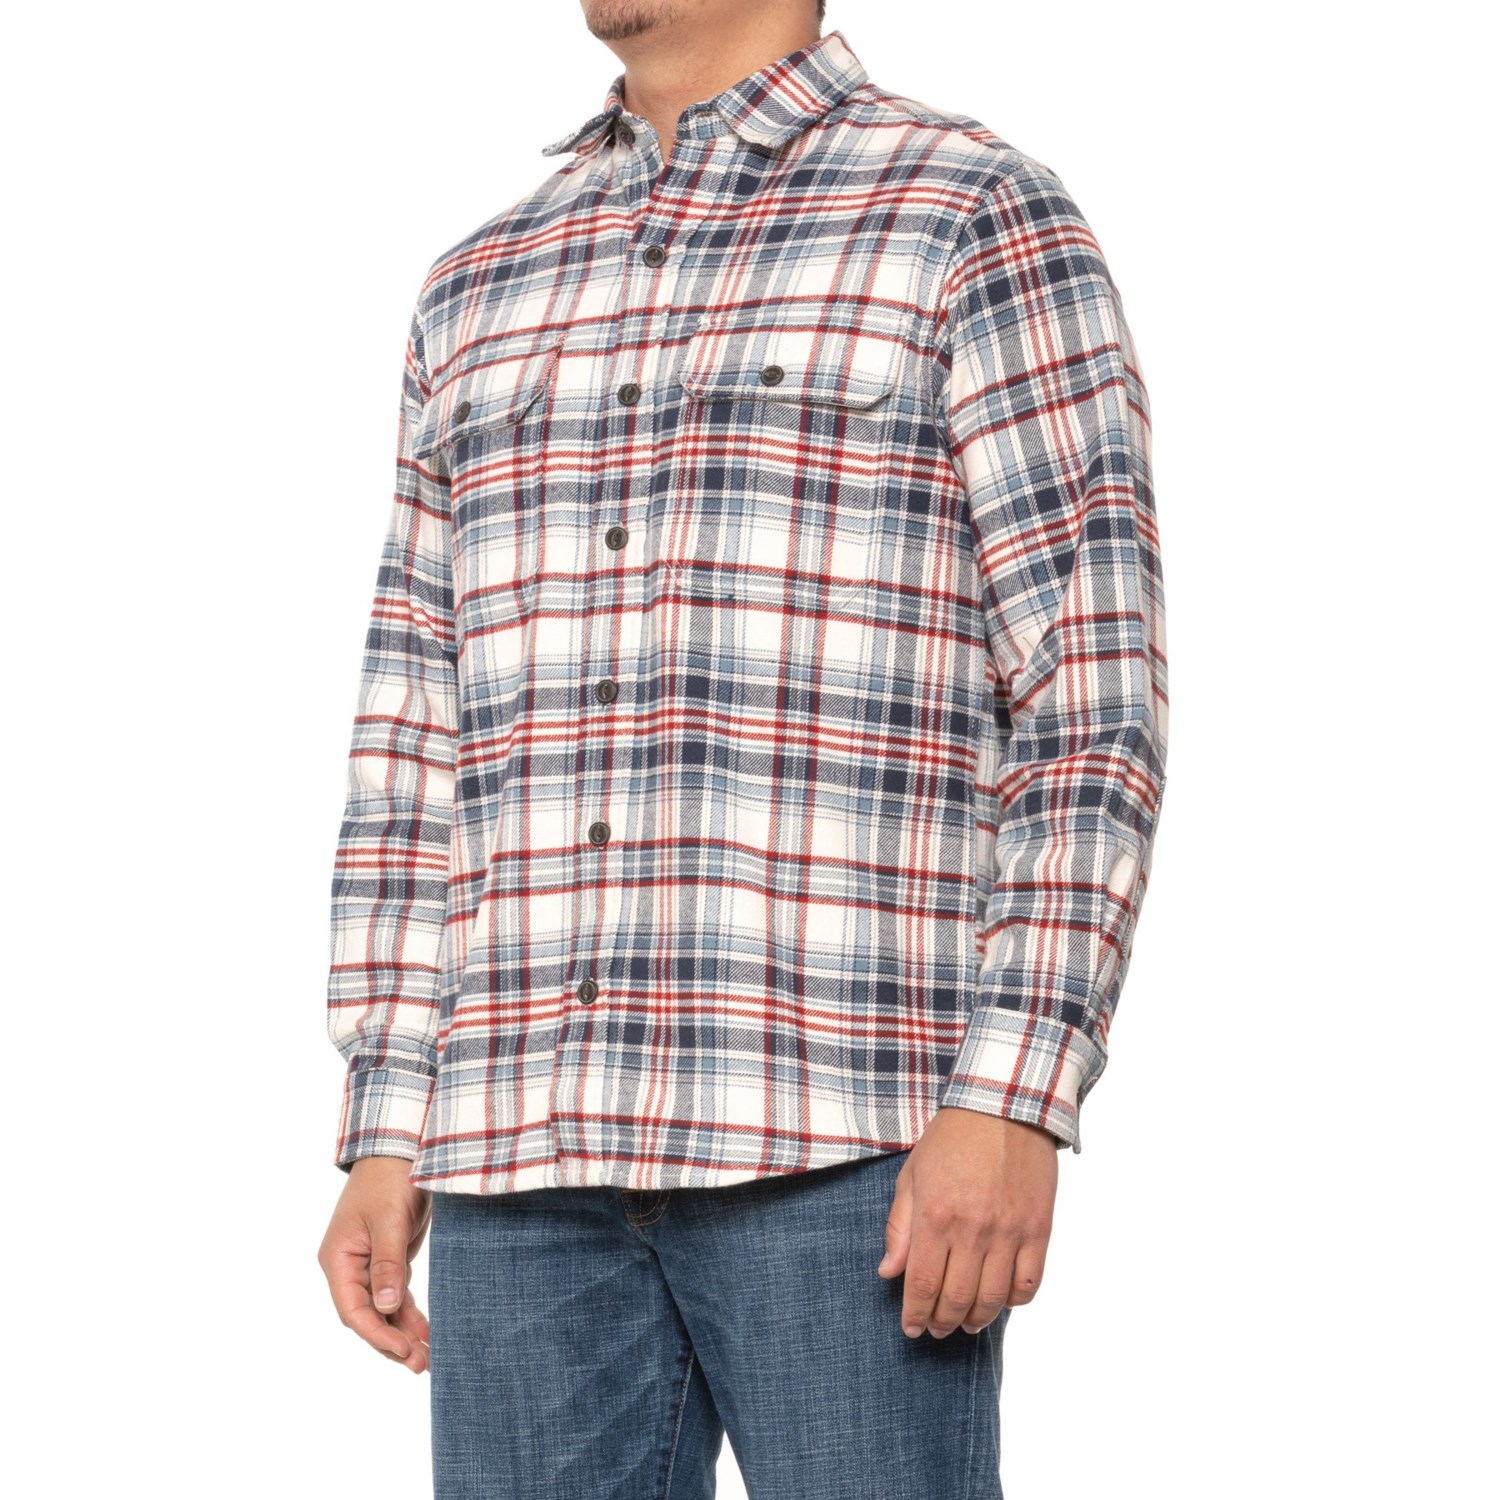 Swiss Alps Heavyweight Flannel Shirt - Long Sleeve - Save 41%